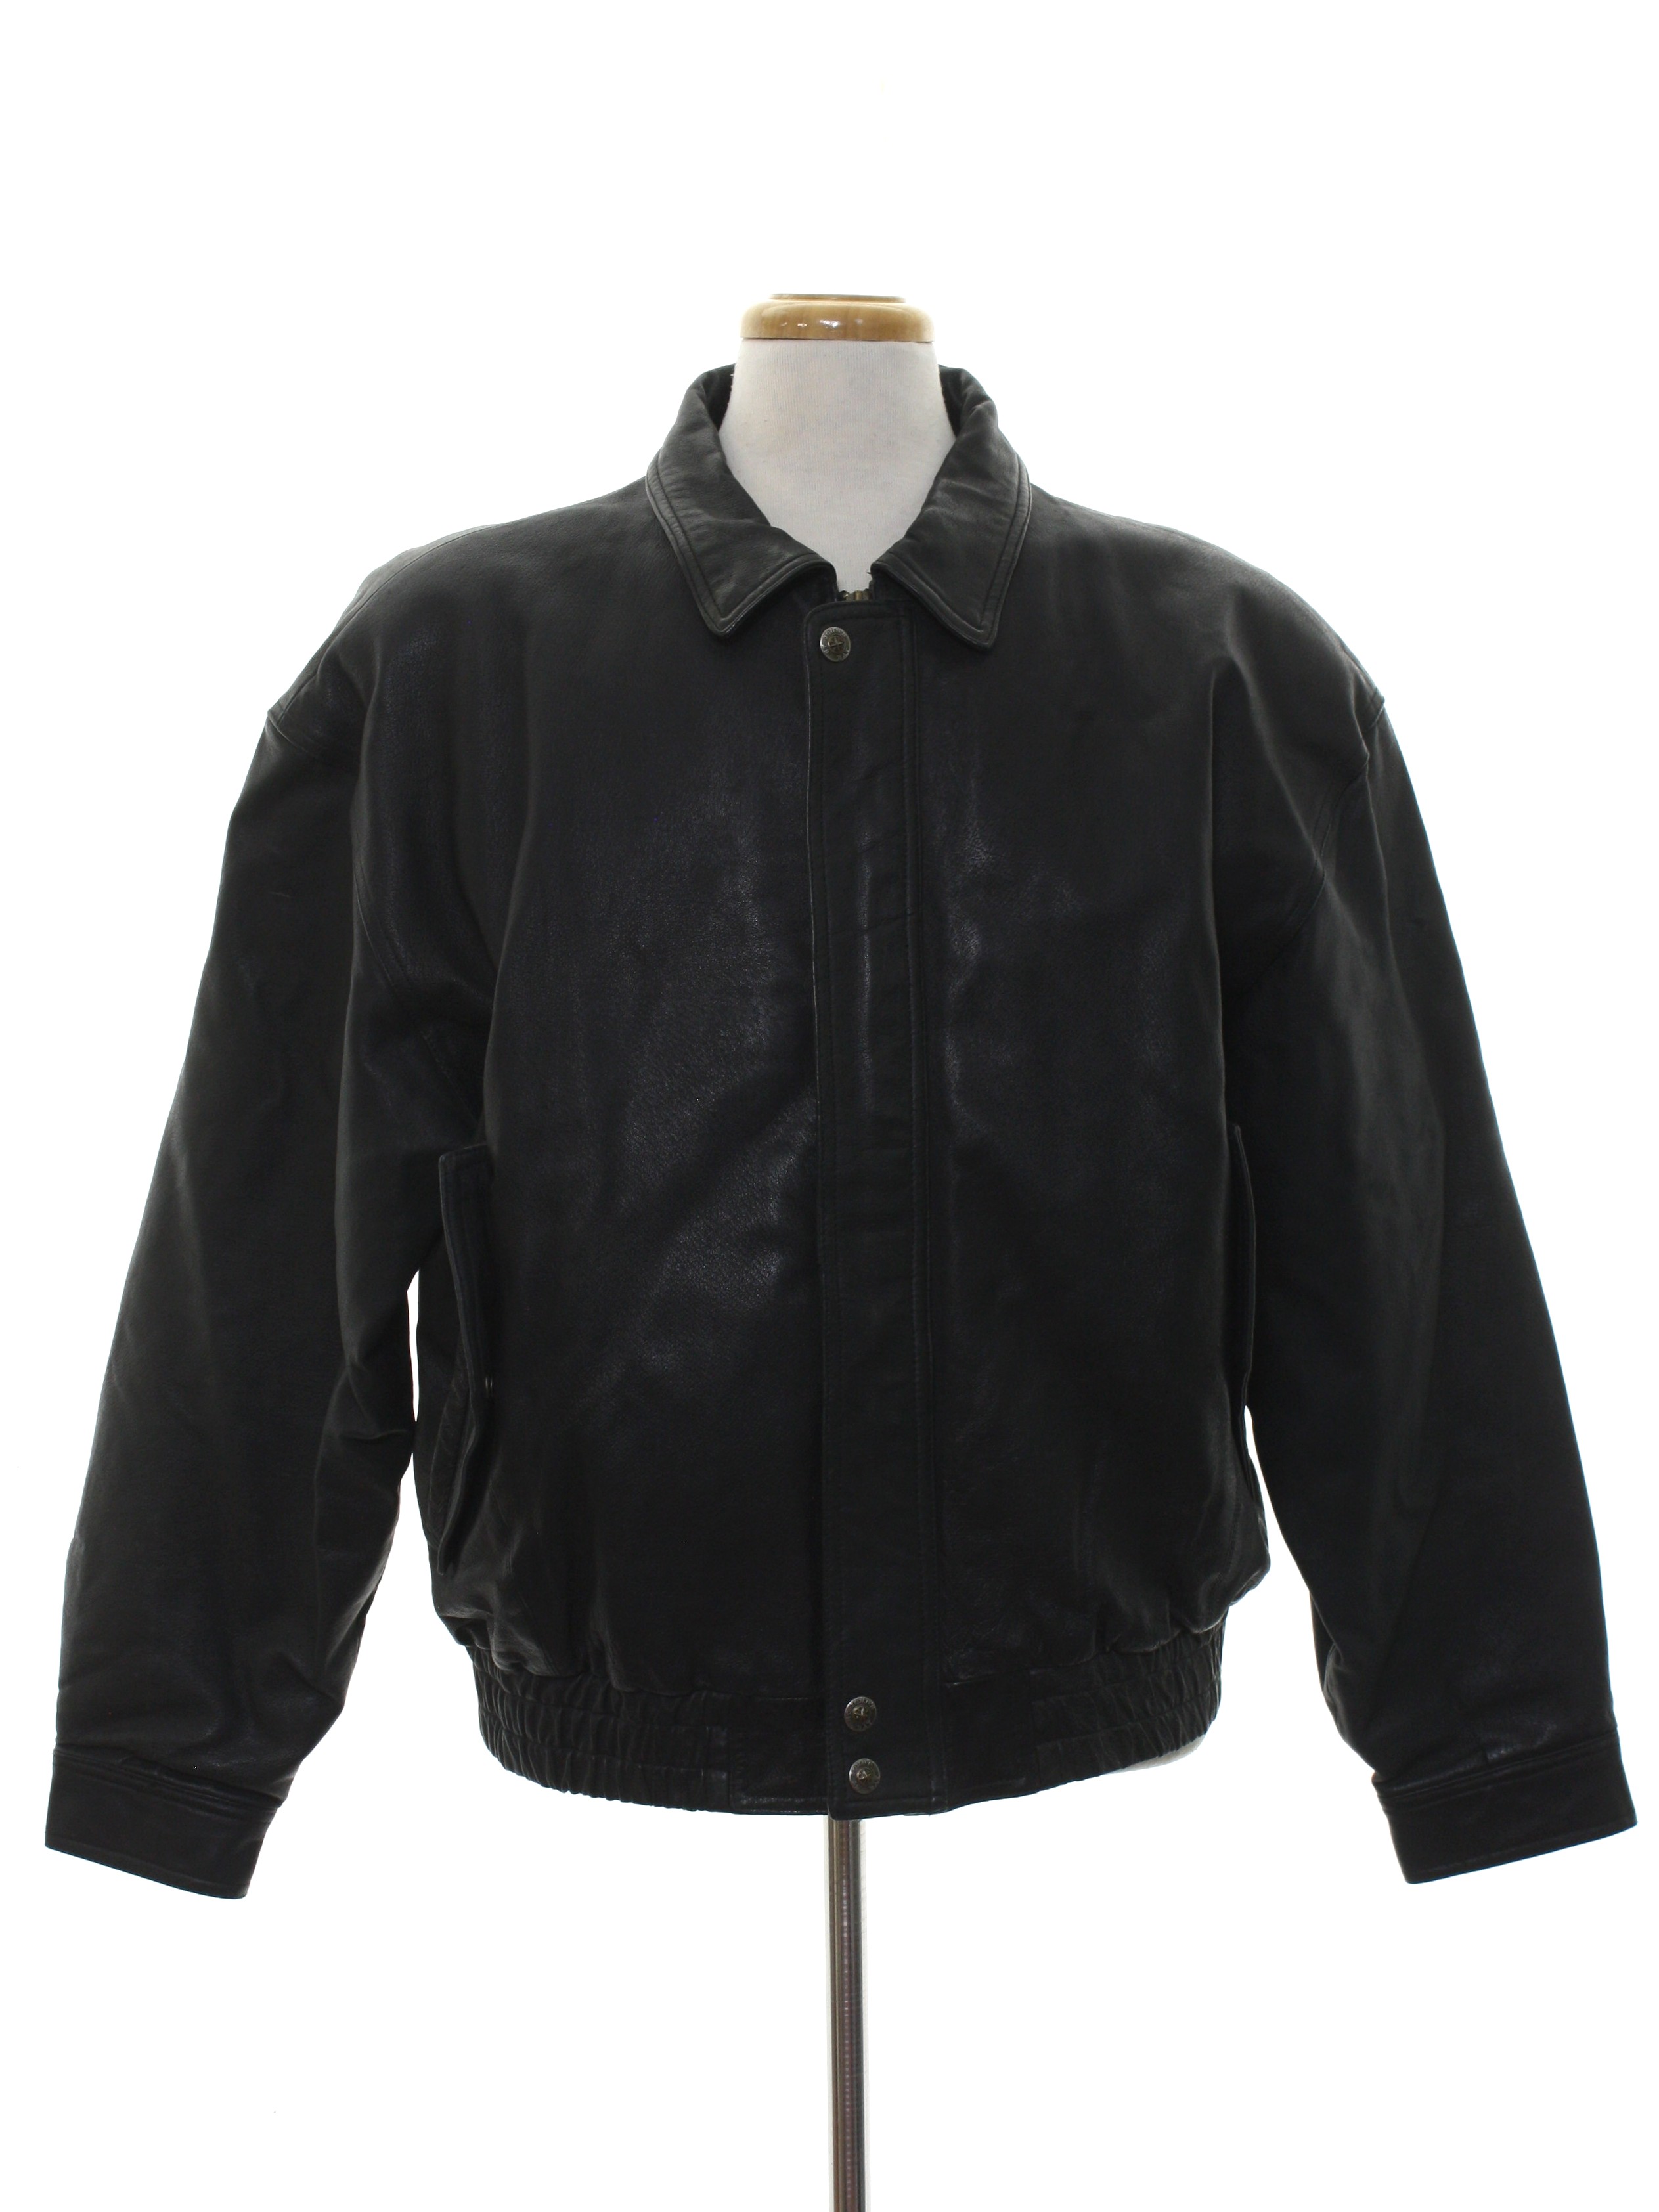 Retro 80s Leather Jacket (St Johns Bay) : 80s -St Johns Bay- Mens black ...